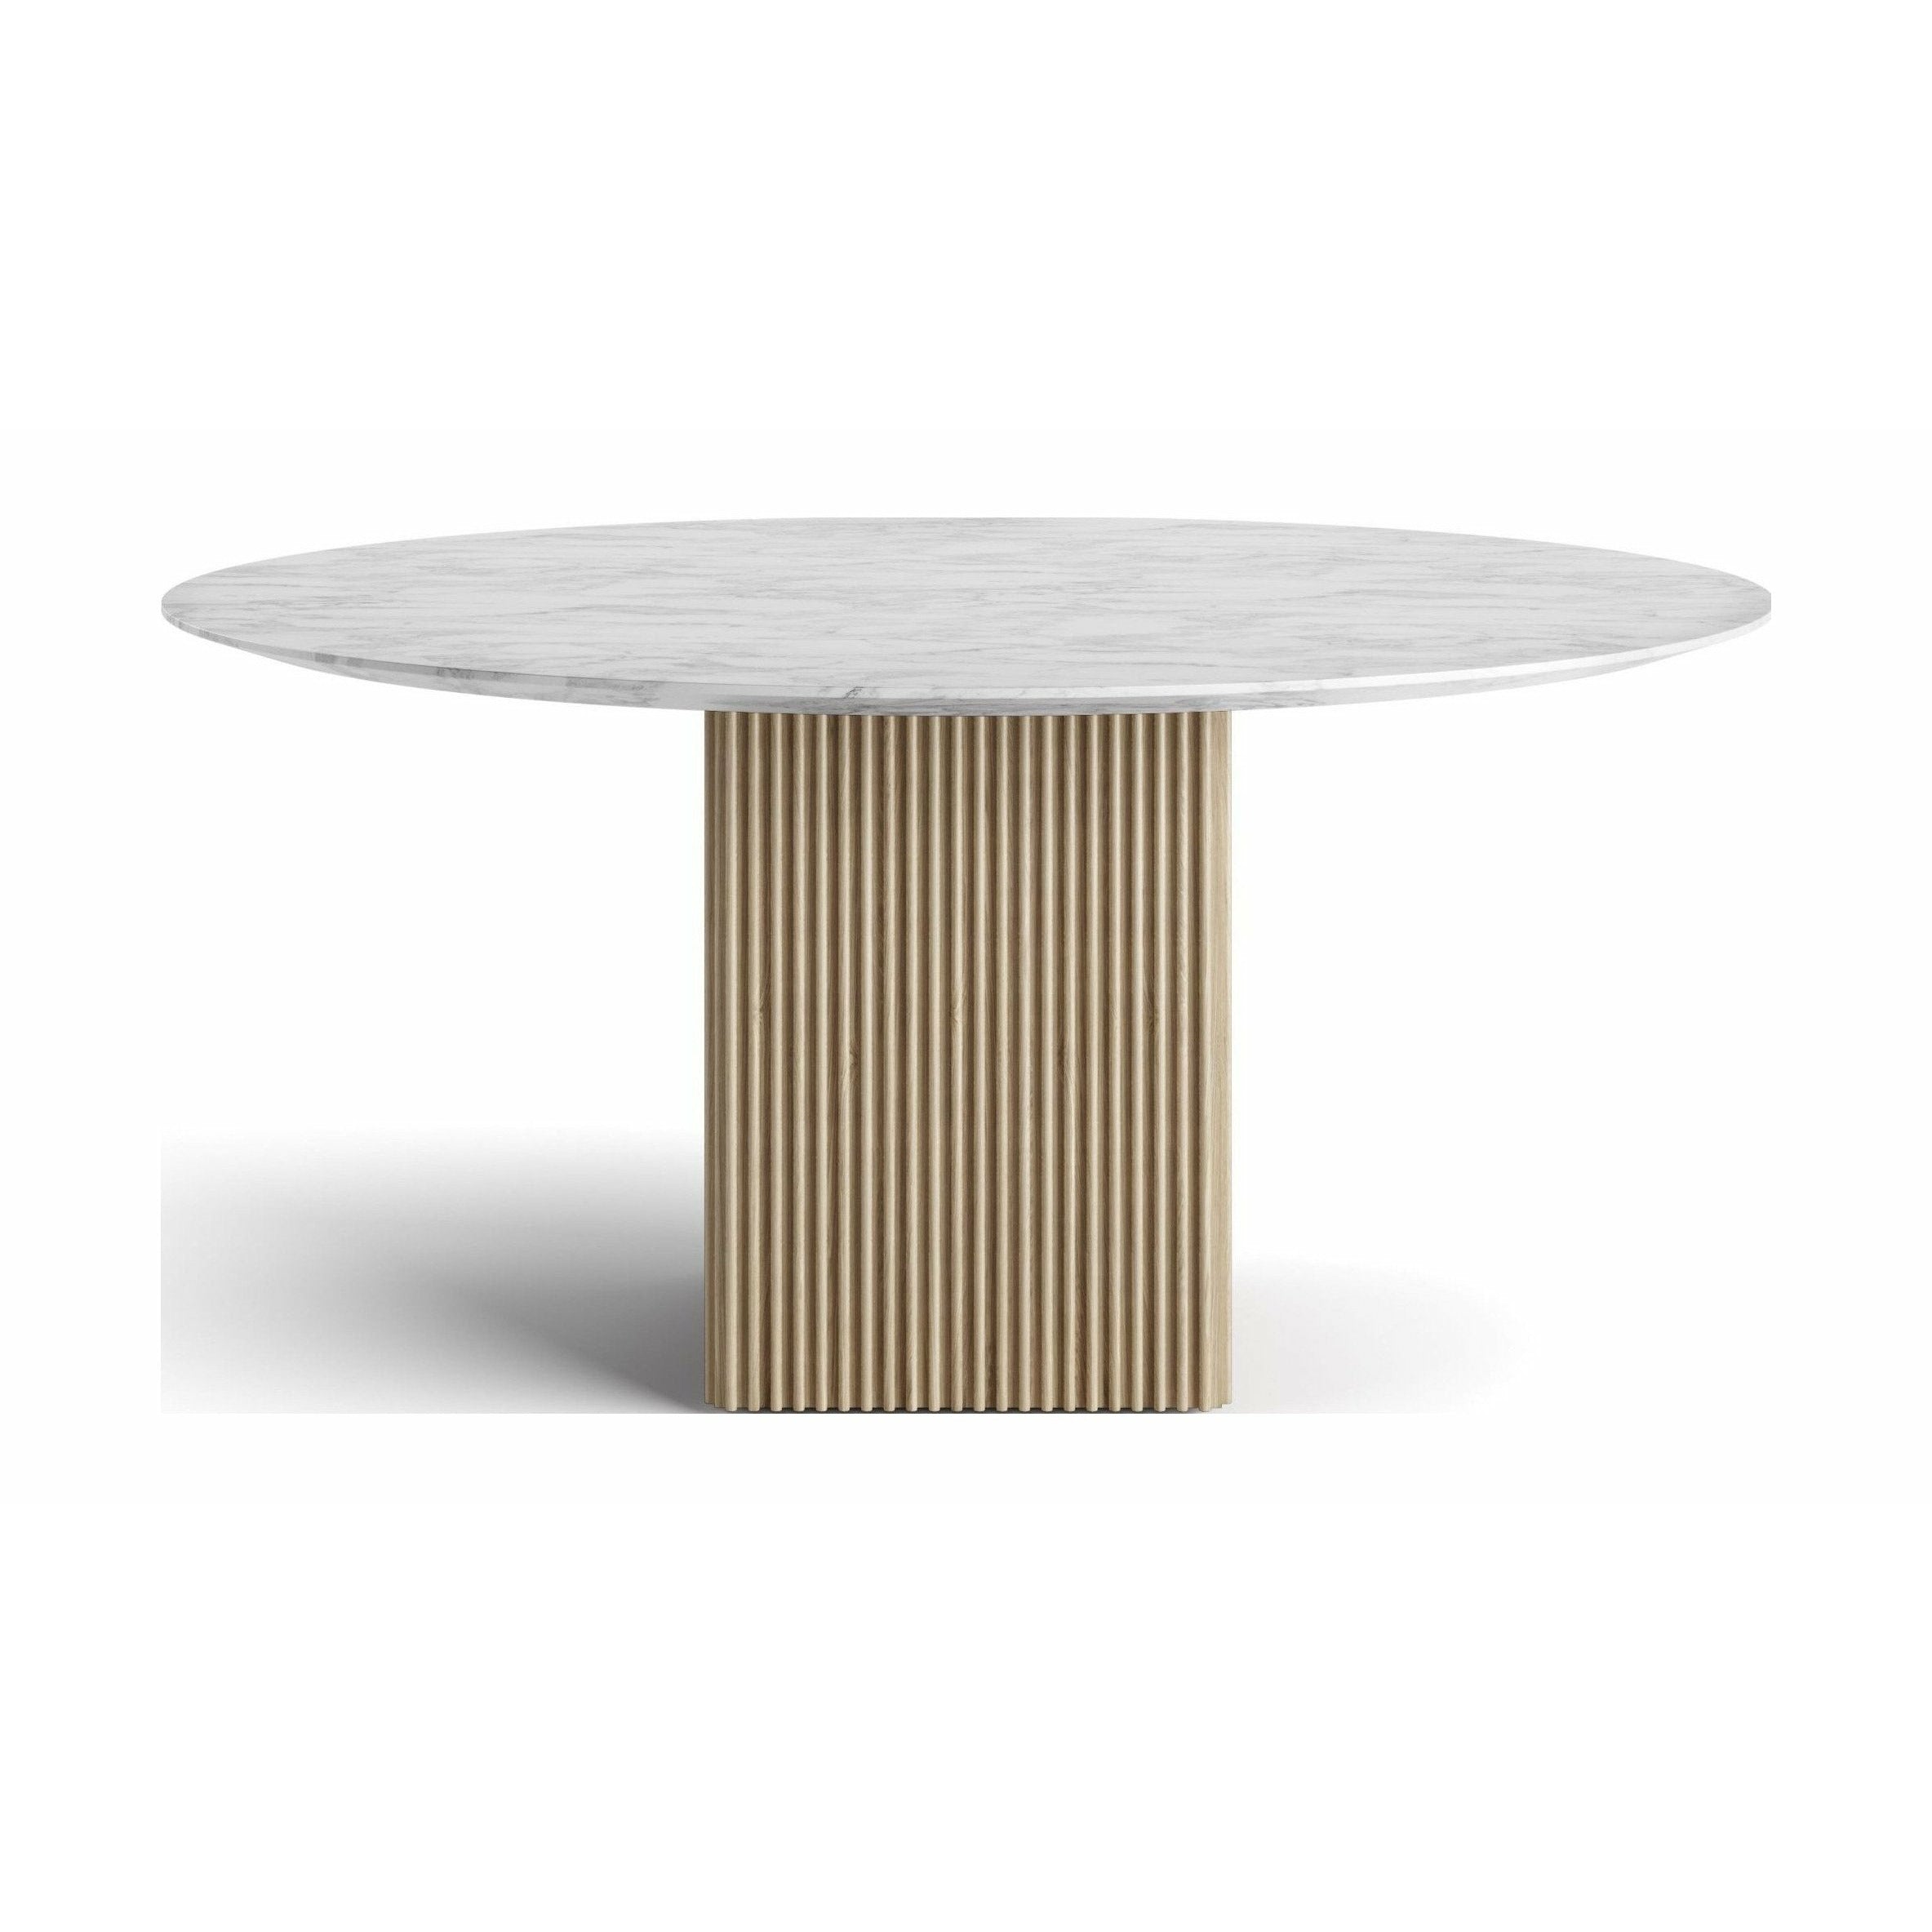 DK3 Ten Table à manger ronde marbre carrara / chêne savon, Ø150 cm